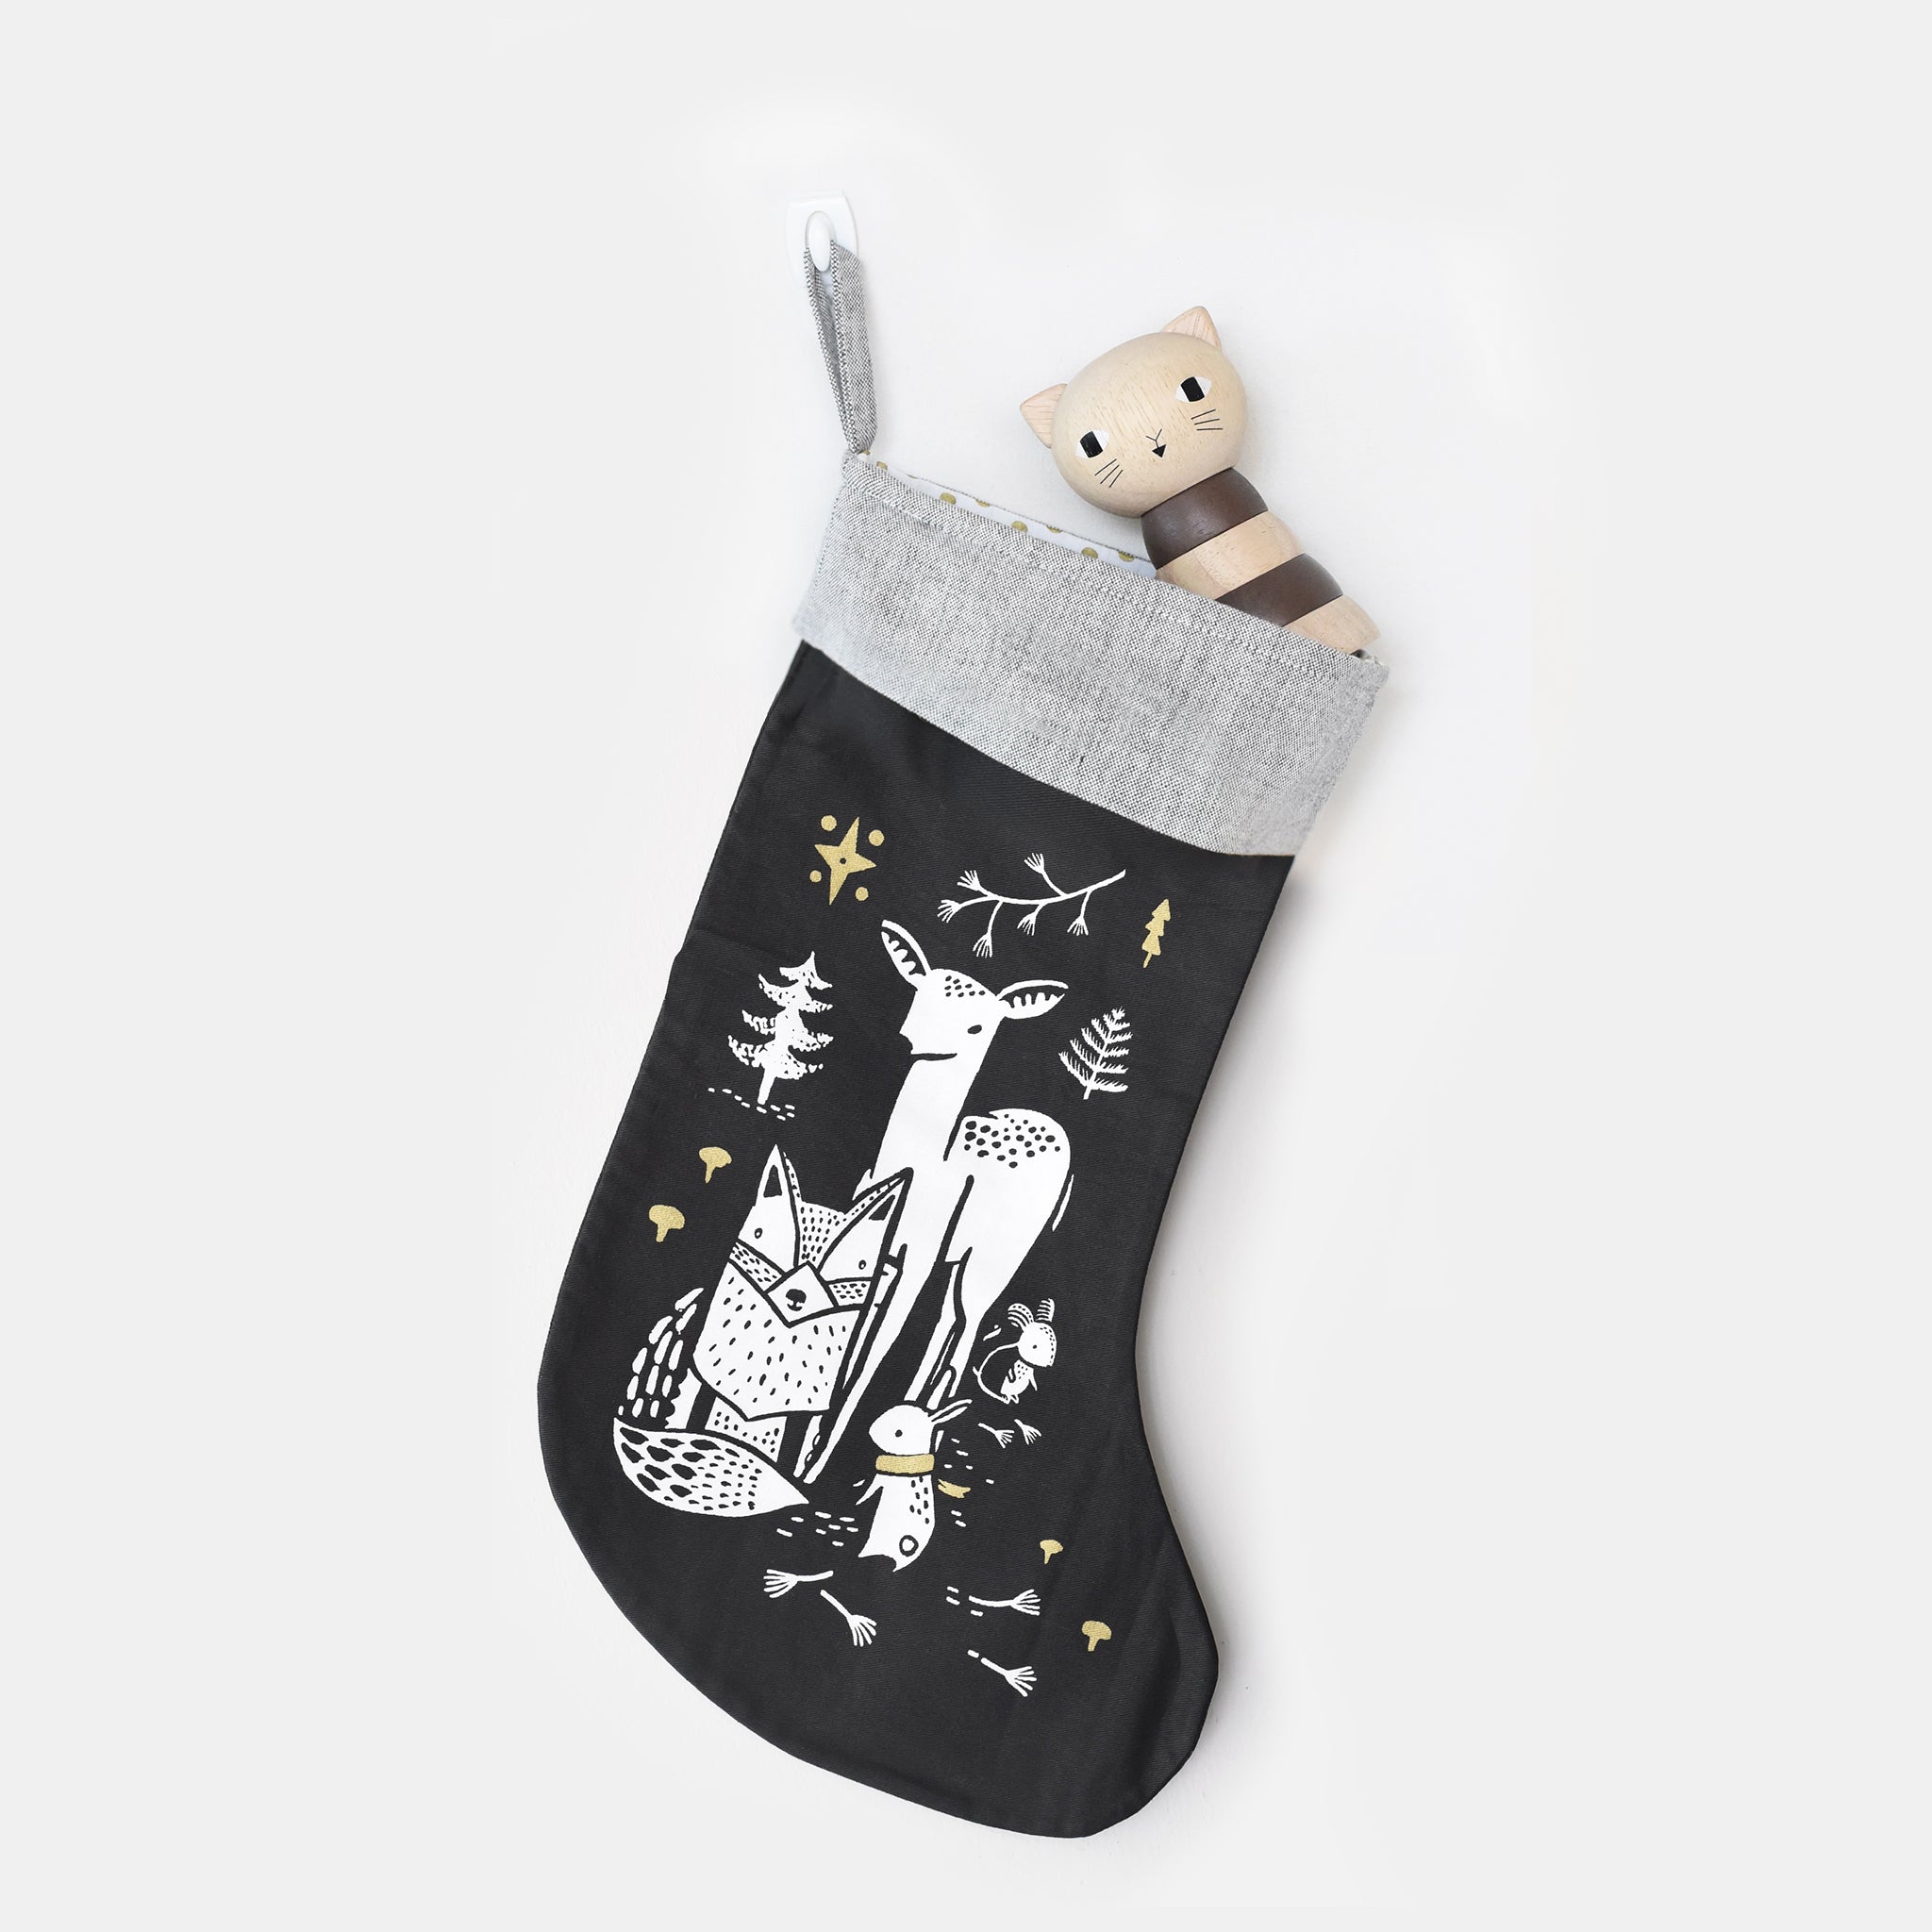 Christmas Stockings  FUNNY DEER – AddyLou Creates